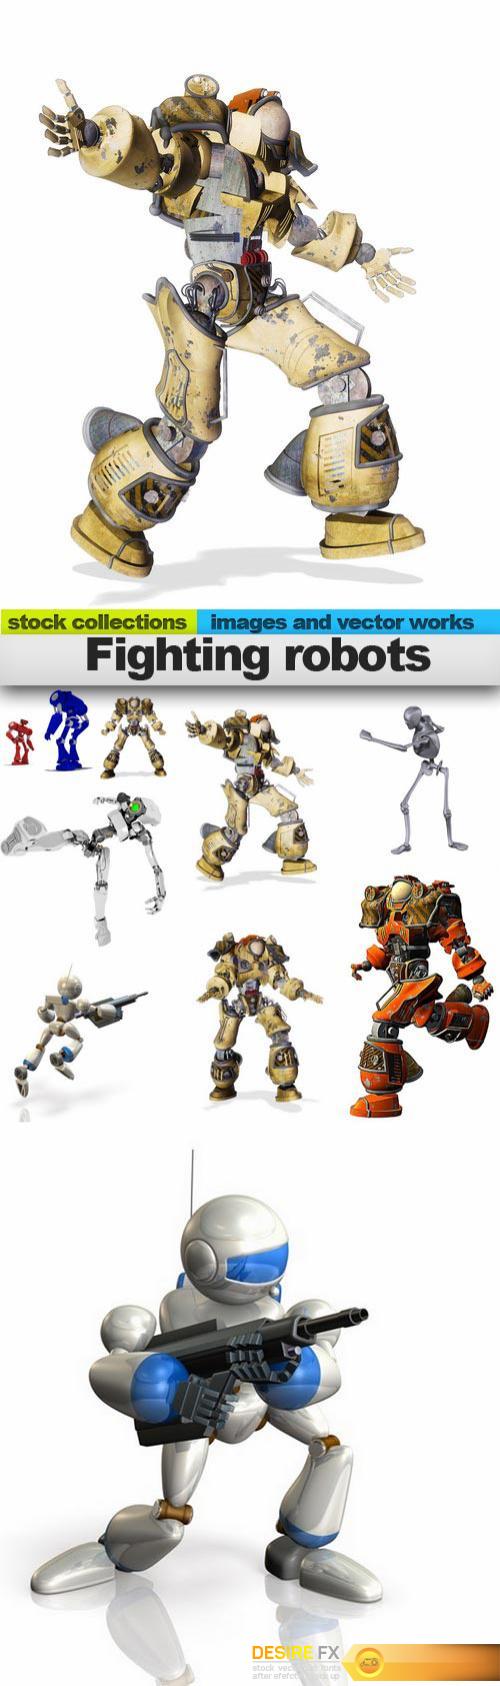 Fighting robots, 09 x UHQ JPEG